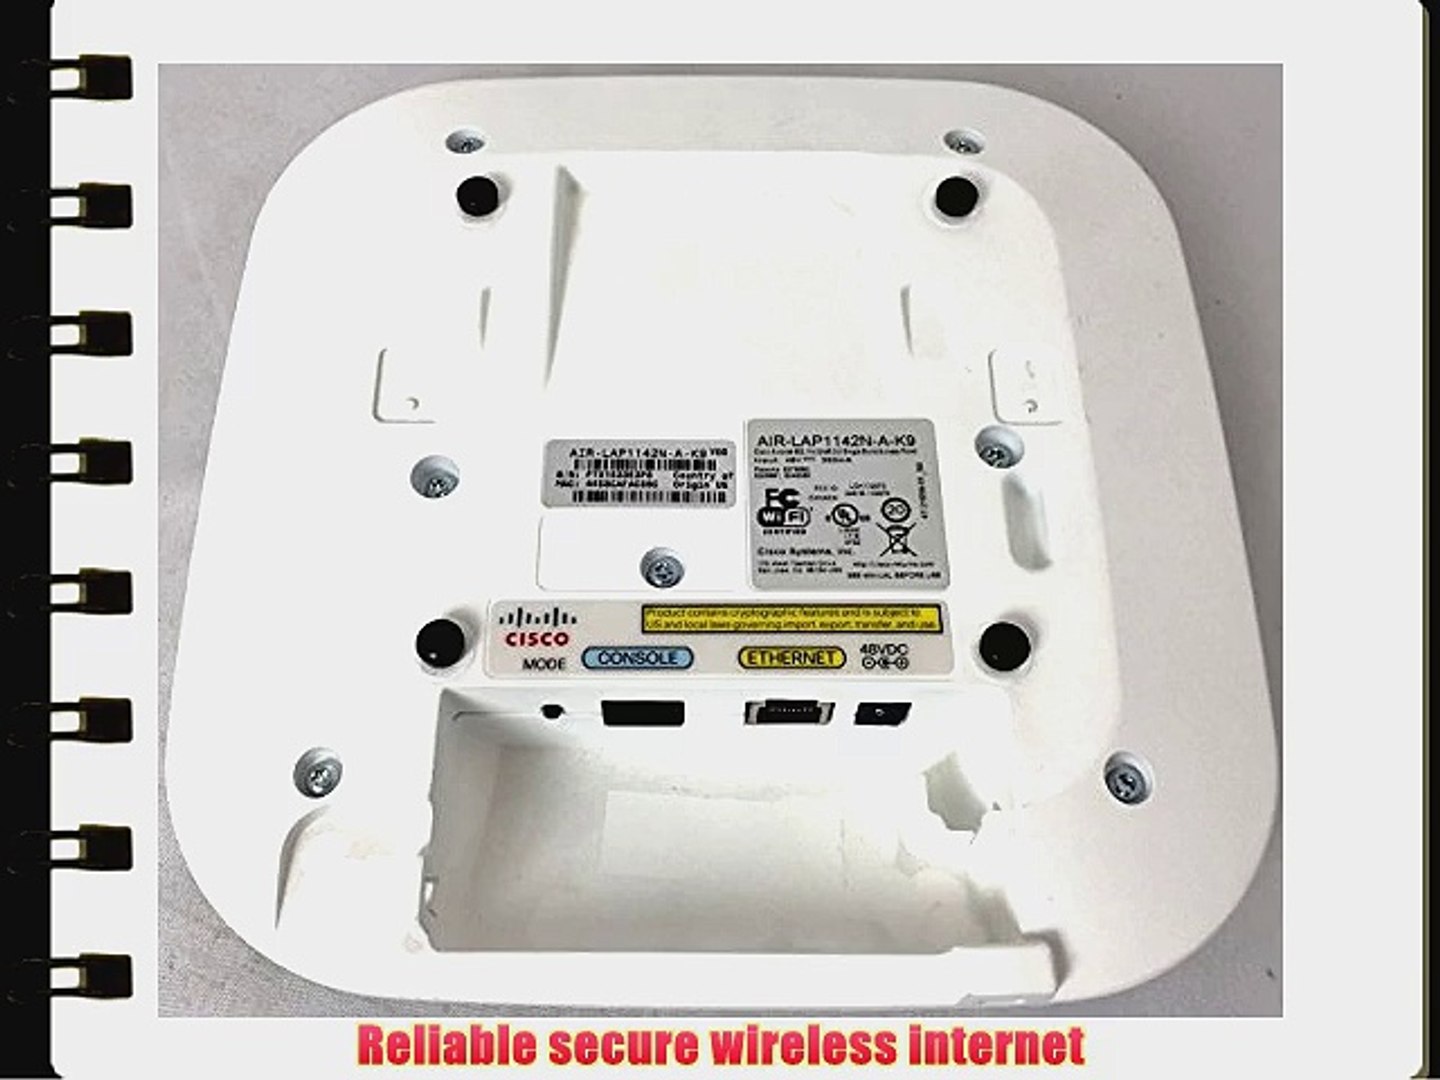 Cisco Aironet 1140 Wireless Access Point AIR-LAP1142N-A-K9 Autonomous with PoE 